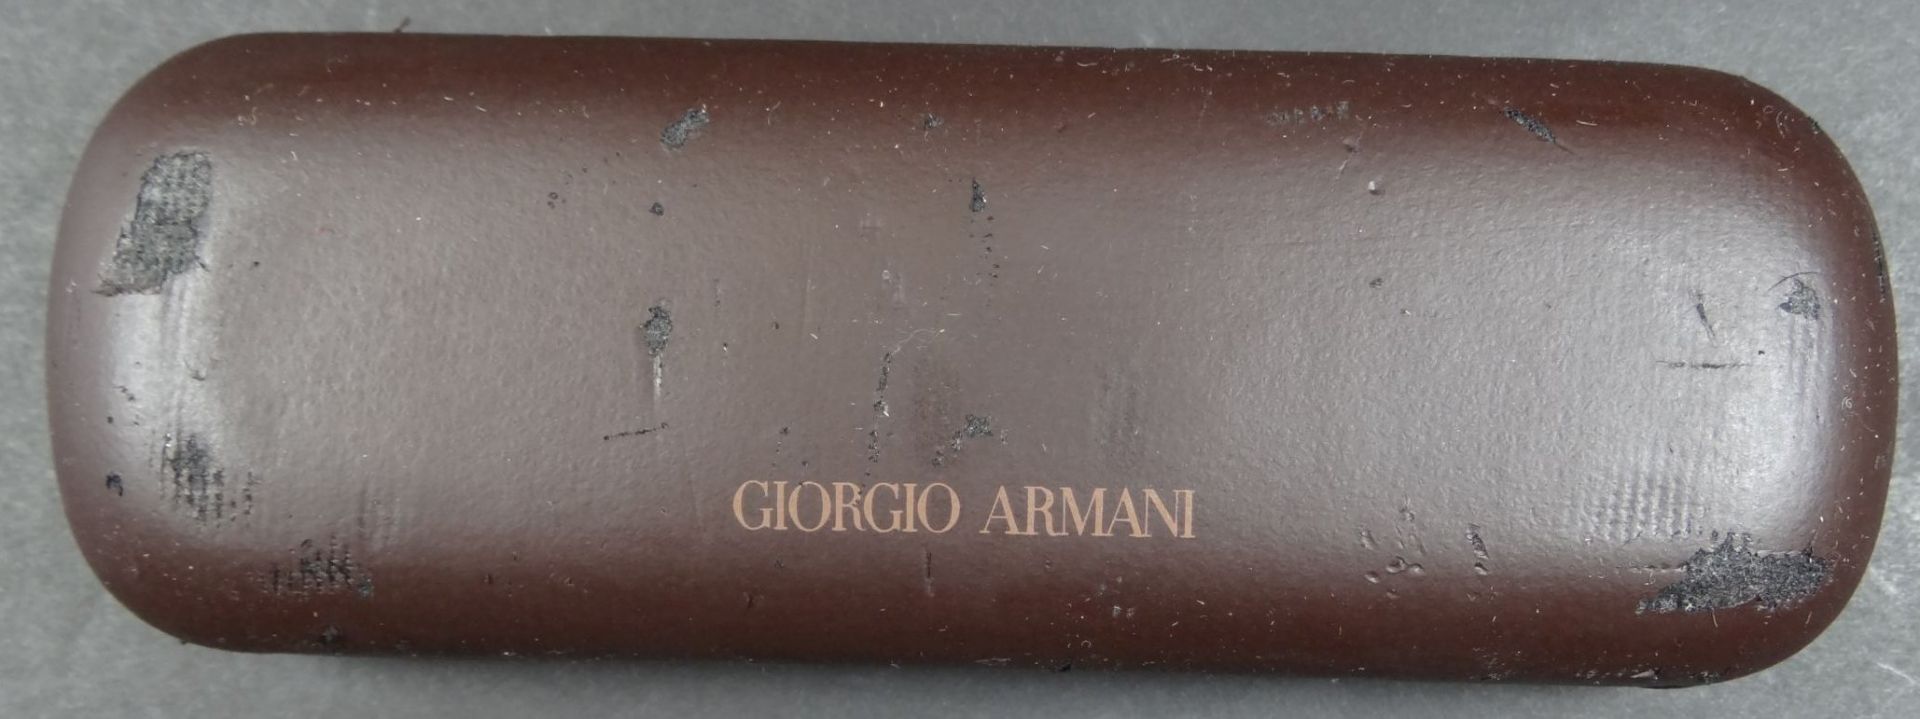 Brille in Etui "Giorgio Armani", Alters-u. Gebrauchsspuren - Bild 2 aus 7